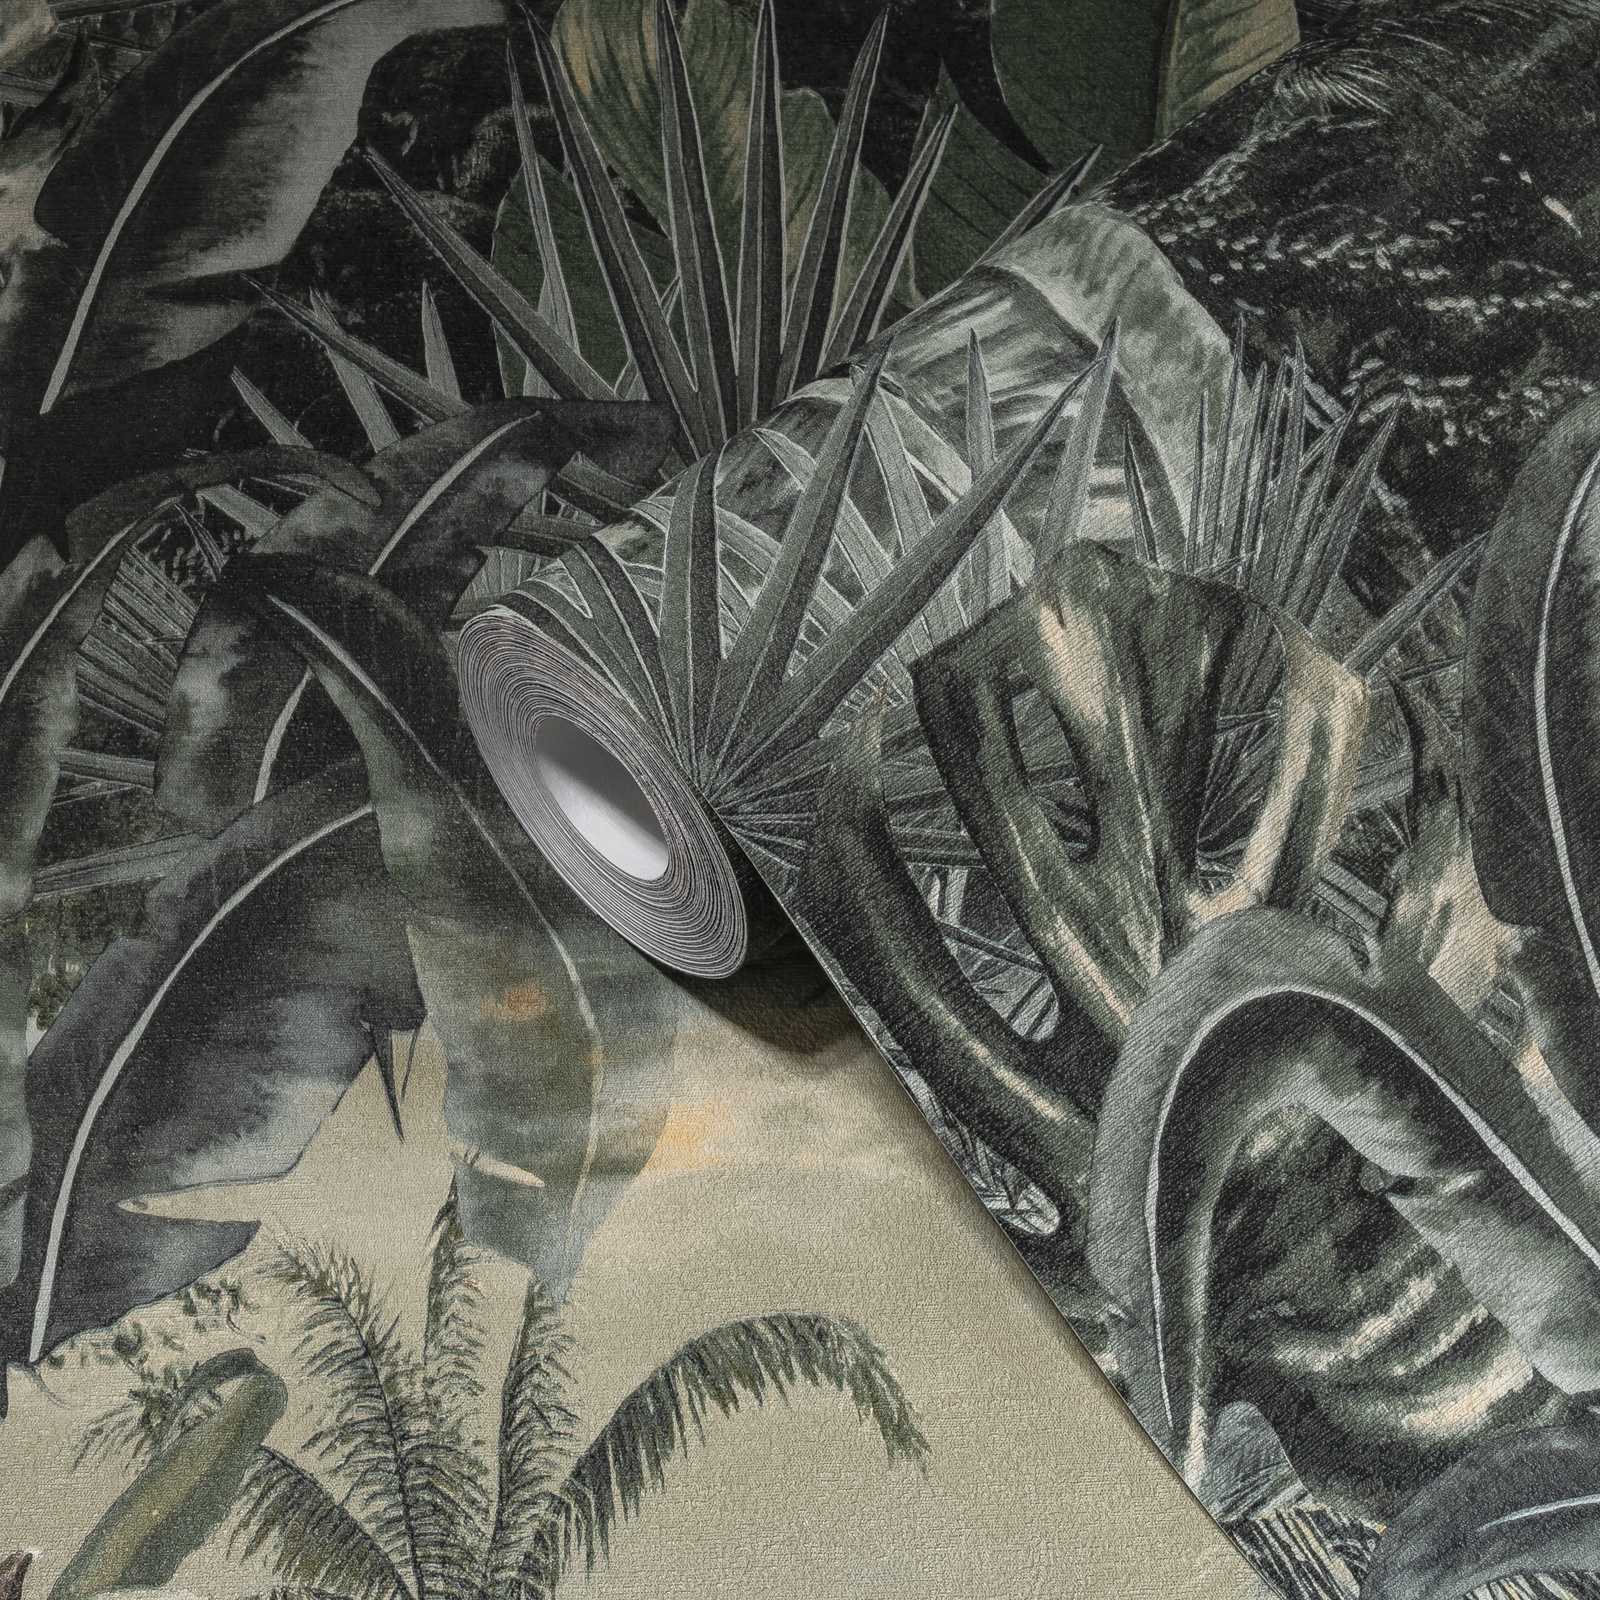             Palm wallpaper jungle pattern, modern colonial style - green
        